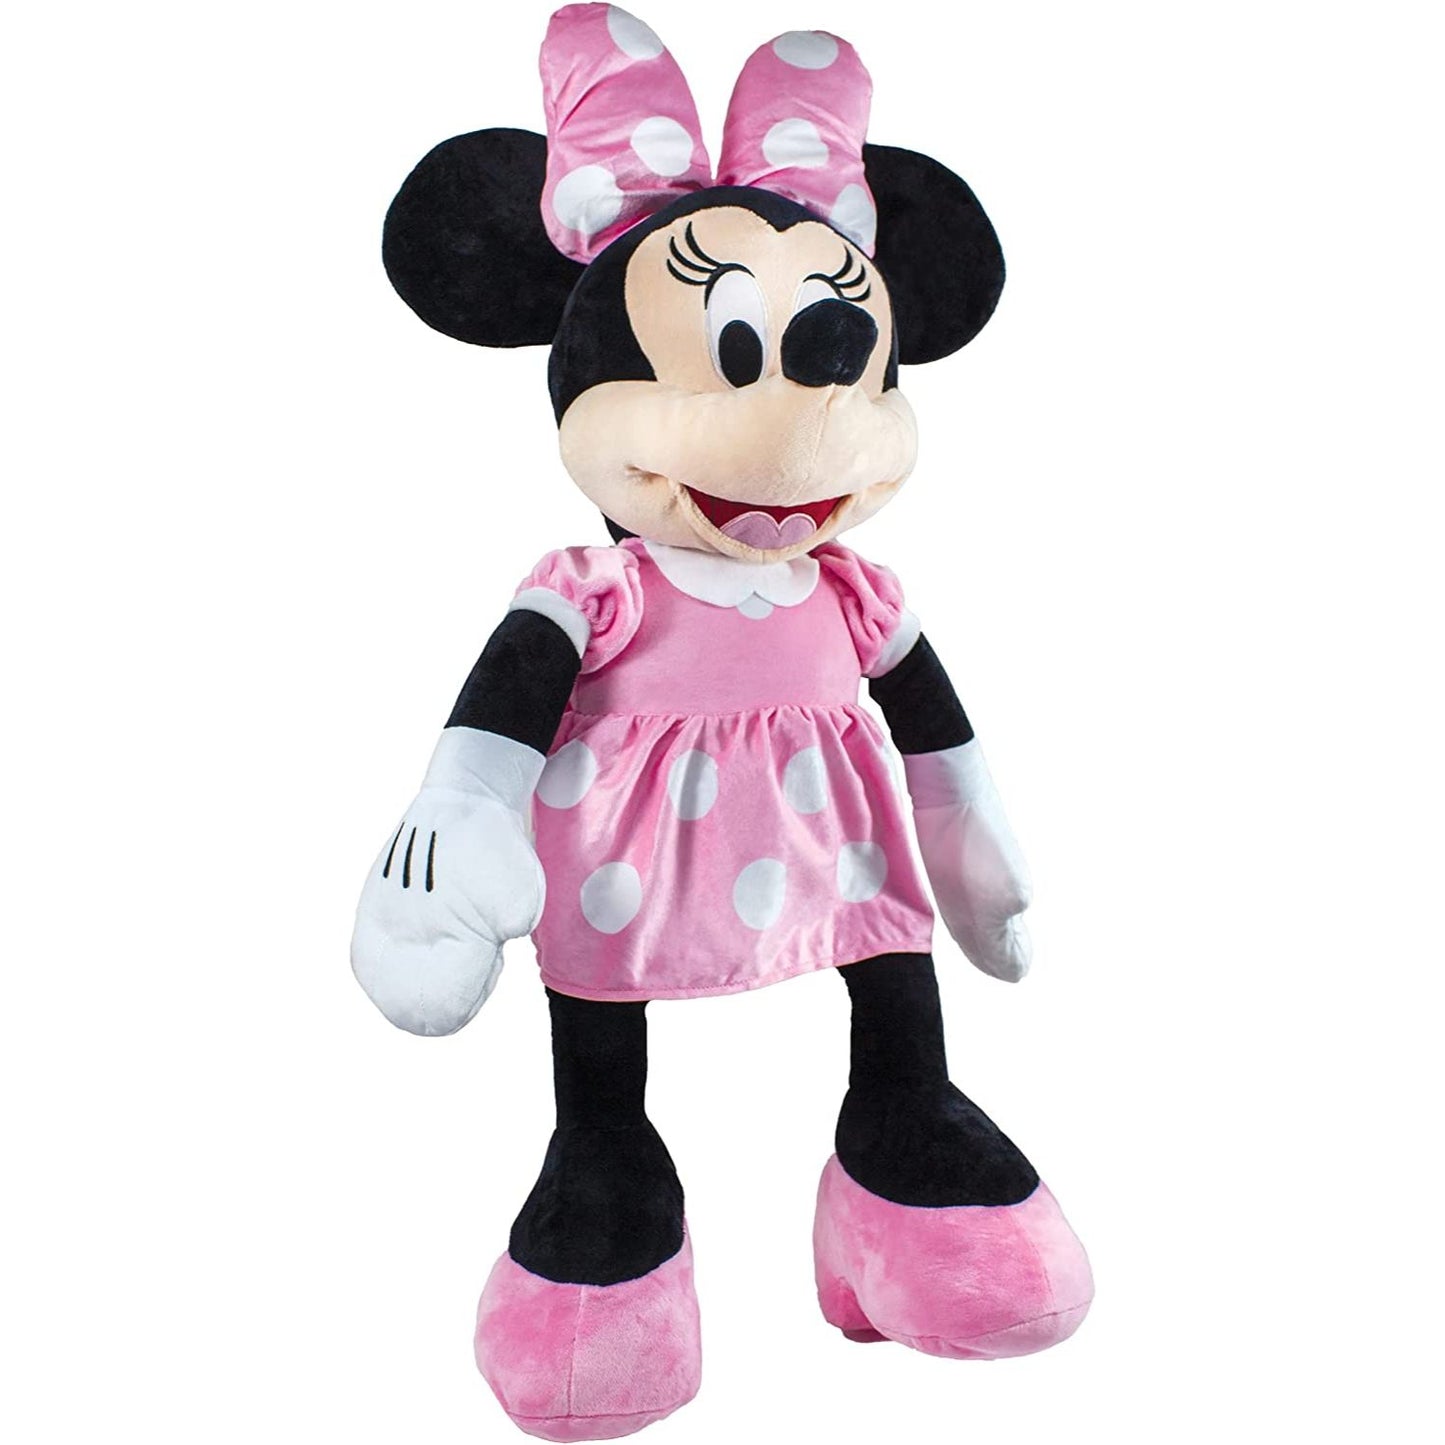 Disney - Minnie Mouse 29 Inch - Large Plush, Multicolor